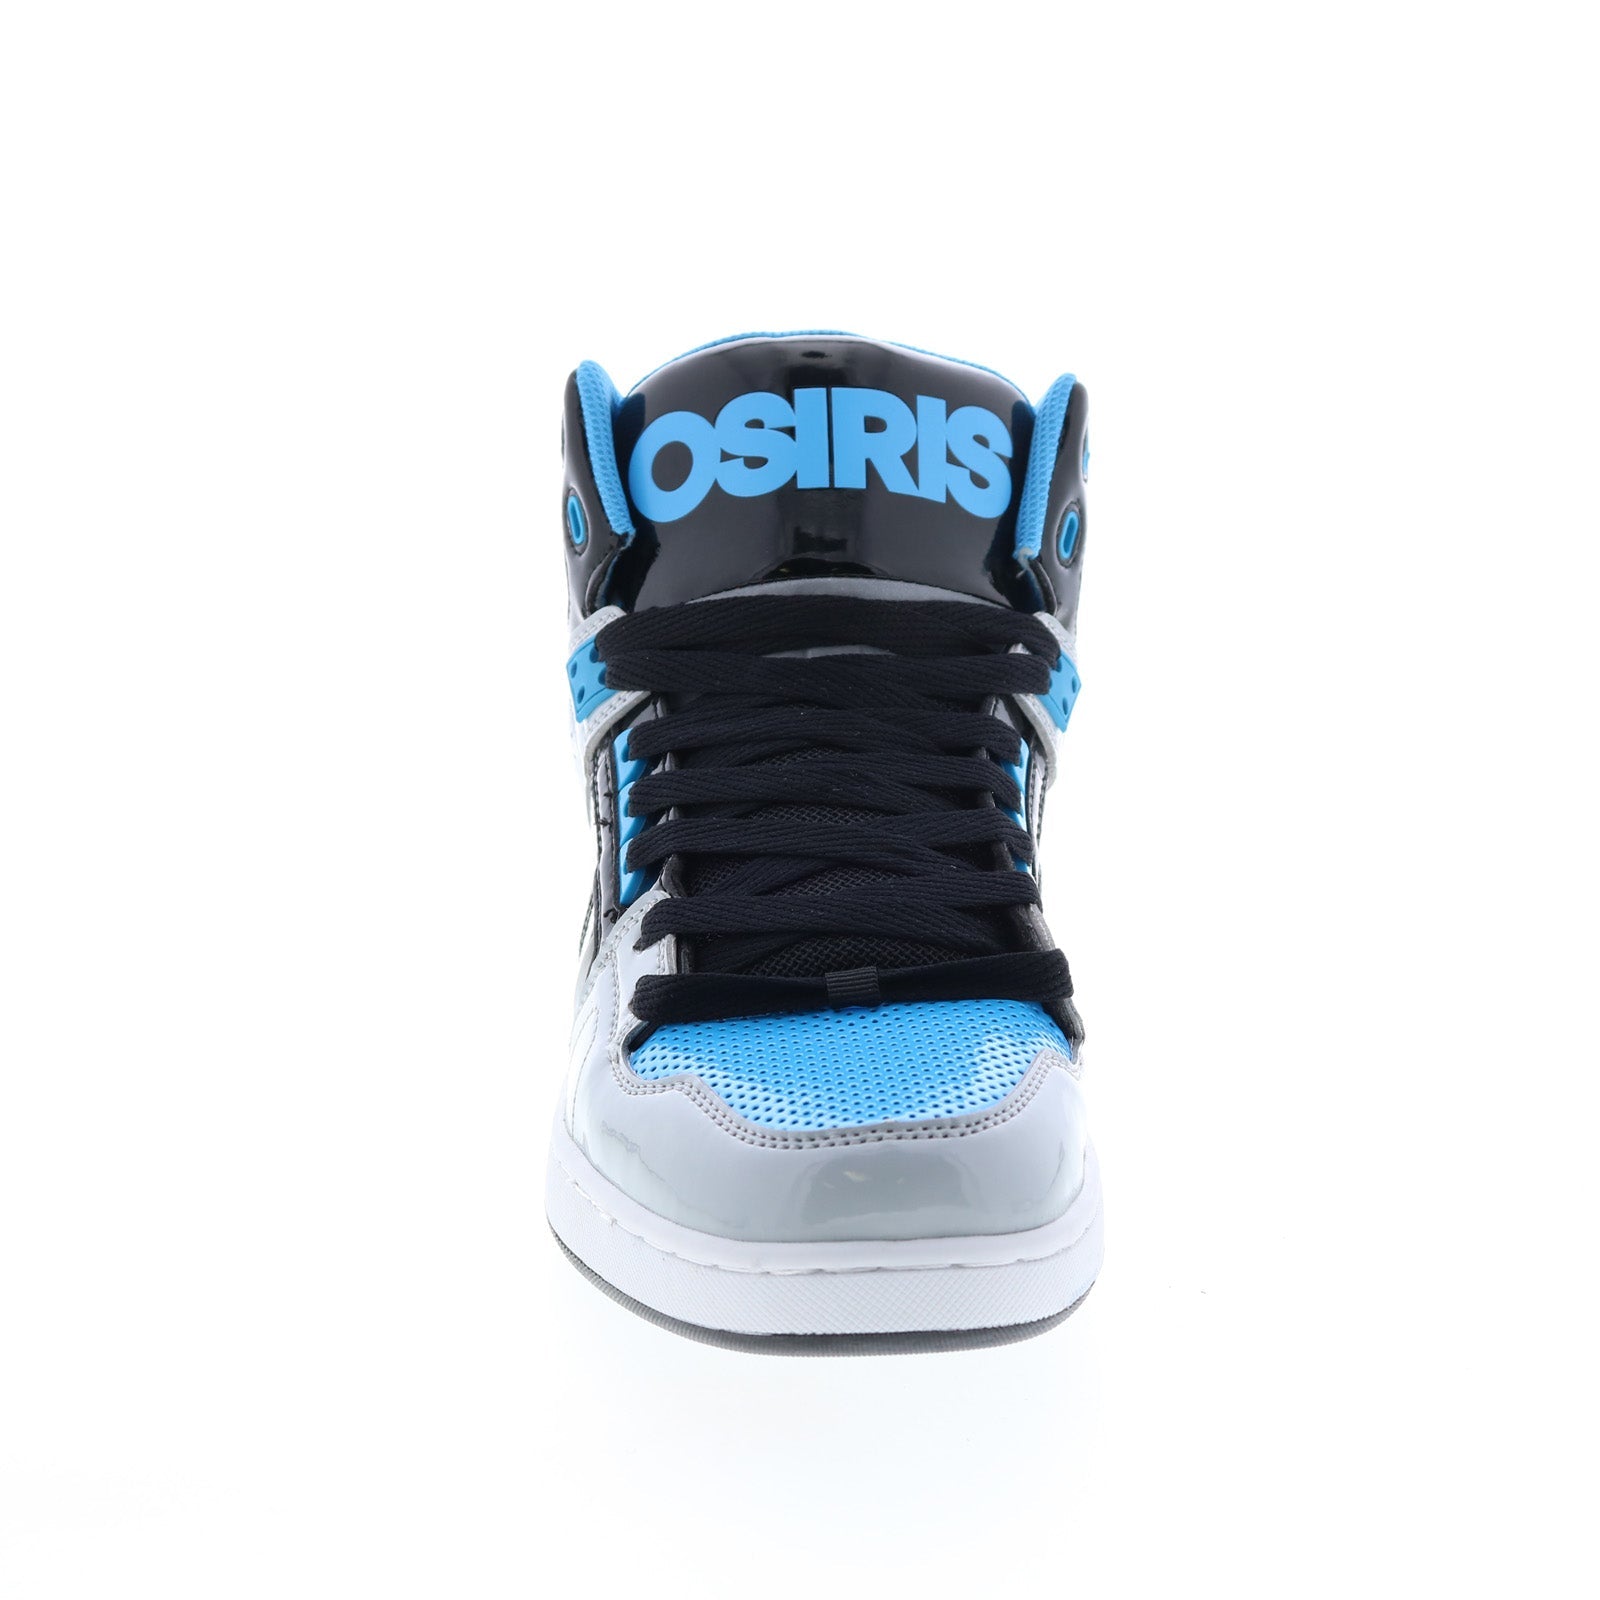 Osiris NYC 83 CLK 1343 2847 Mens Gray Skate Inspired Sneakers 